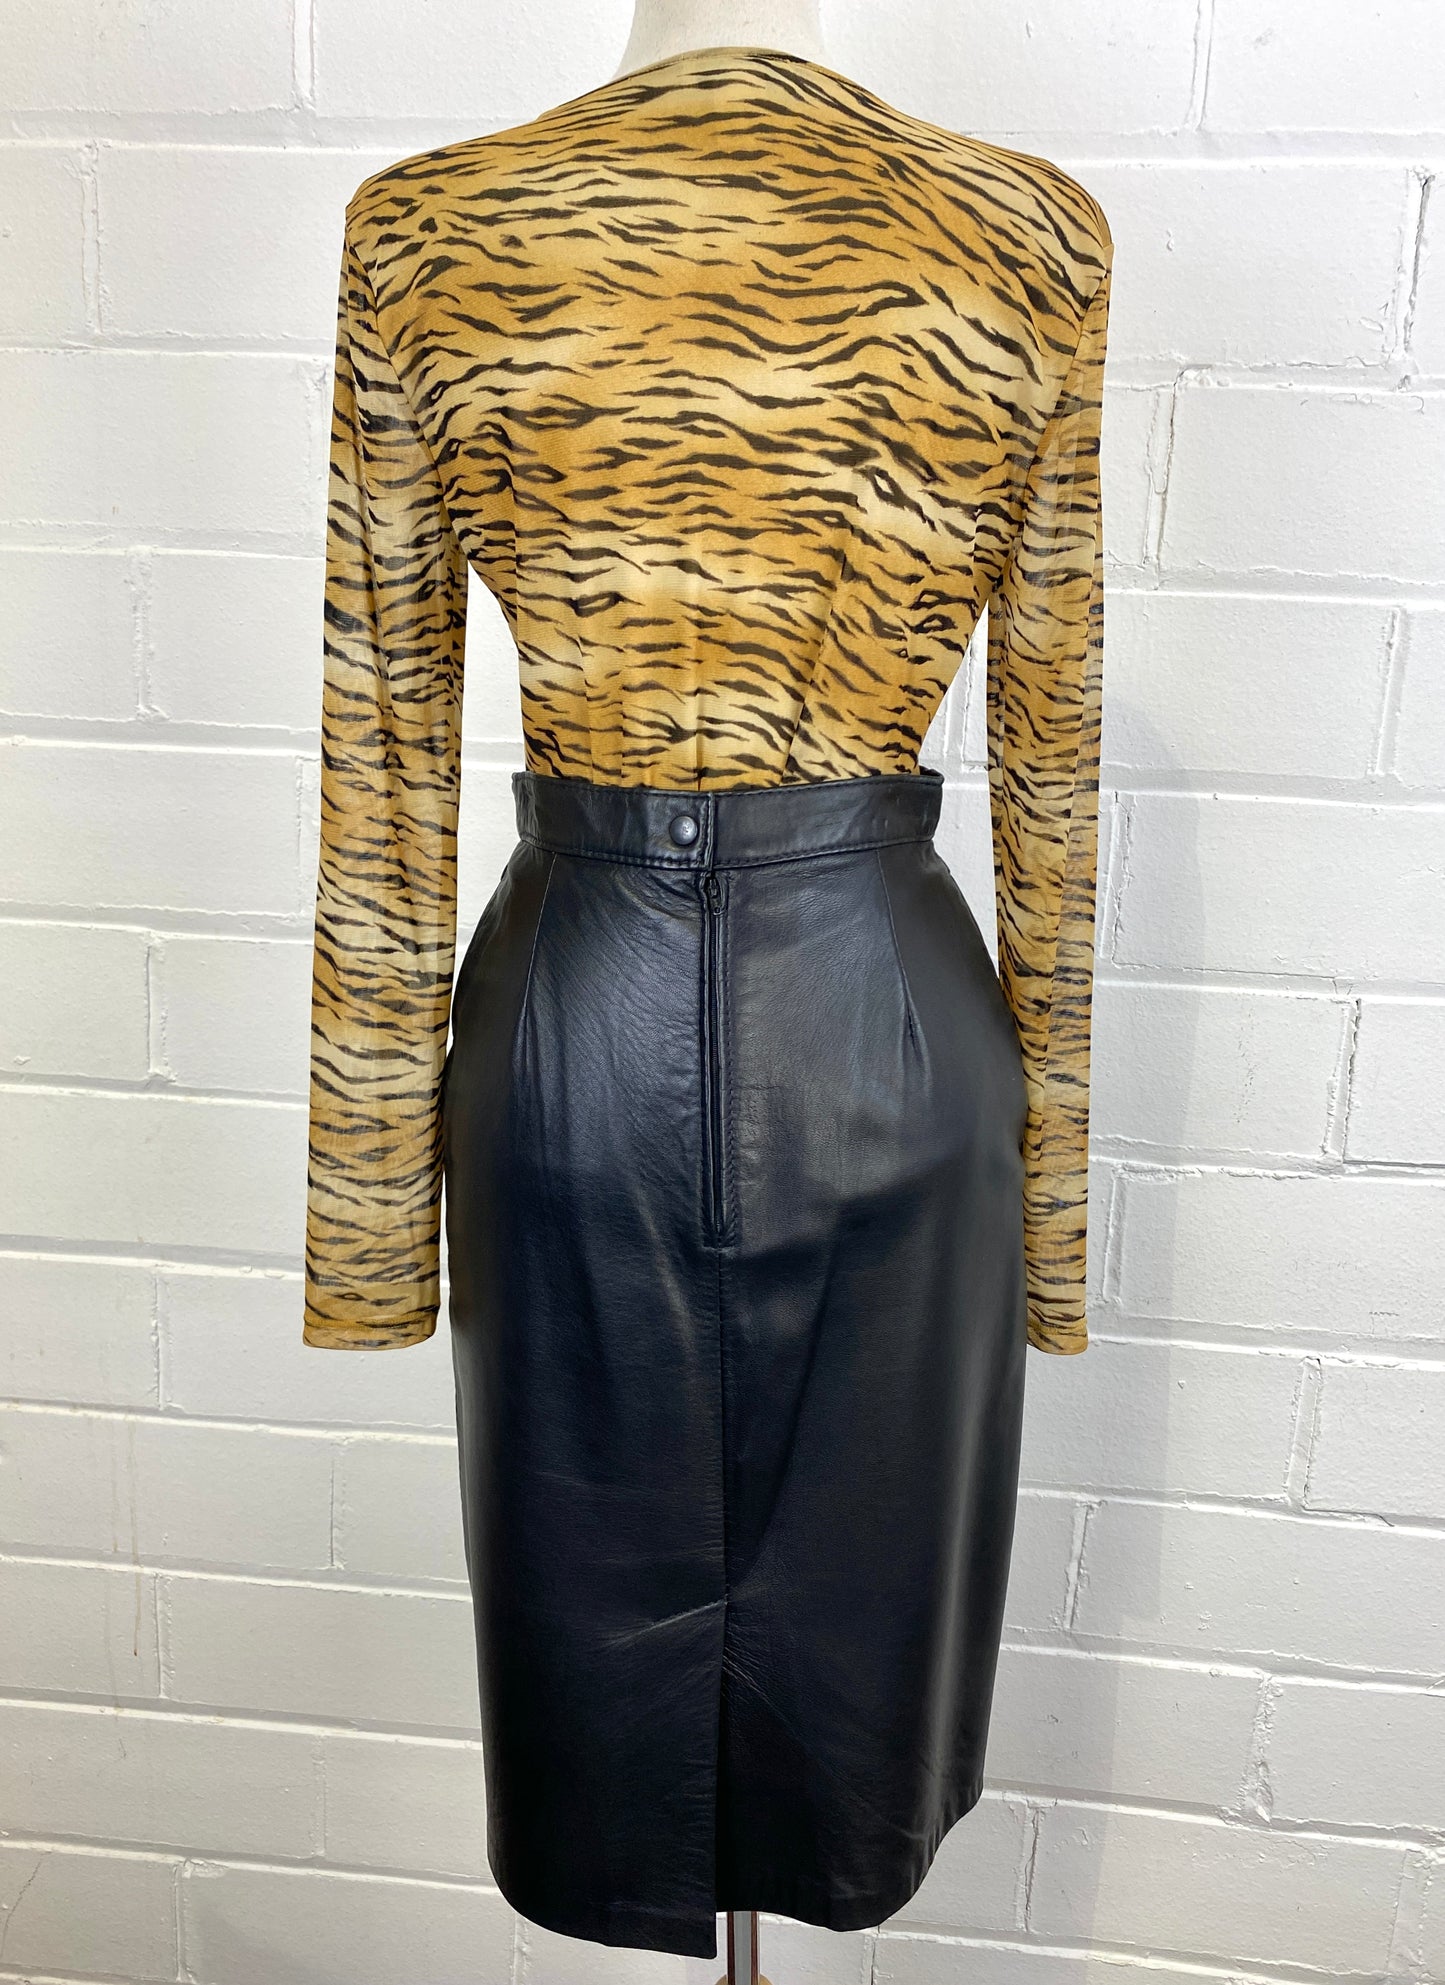 Vintage 1980s Black Leather High-Waist Skirt, W27"